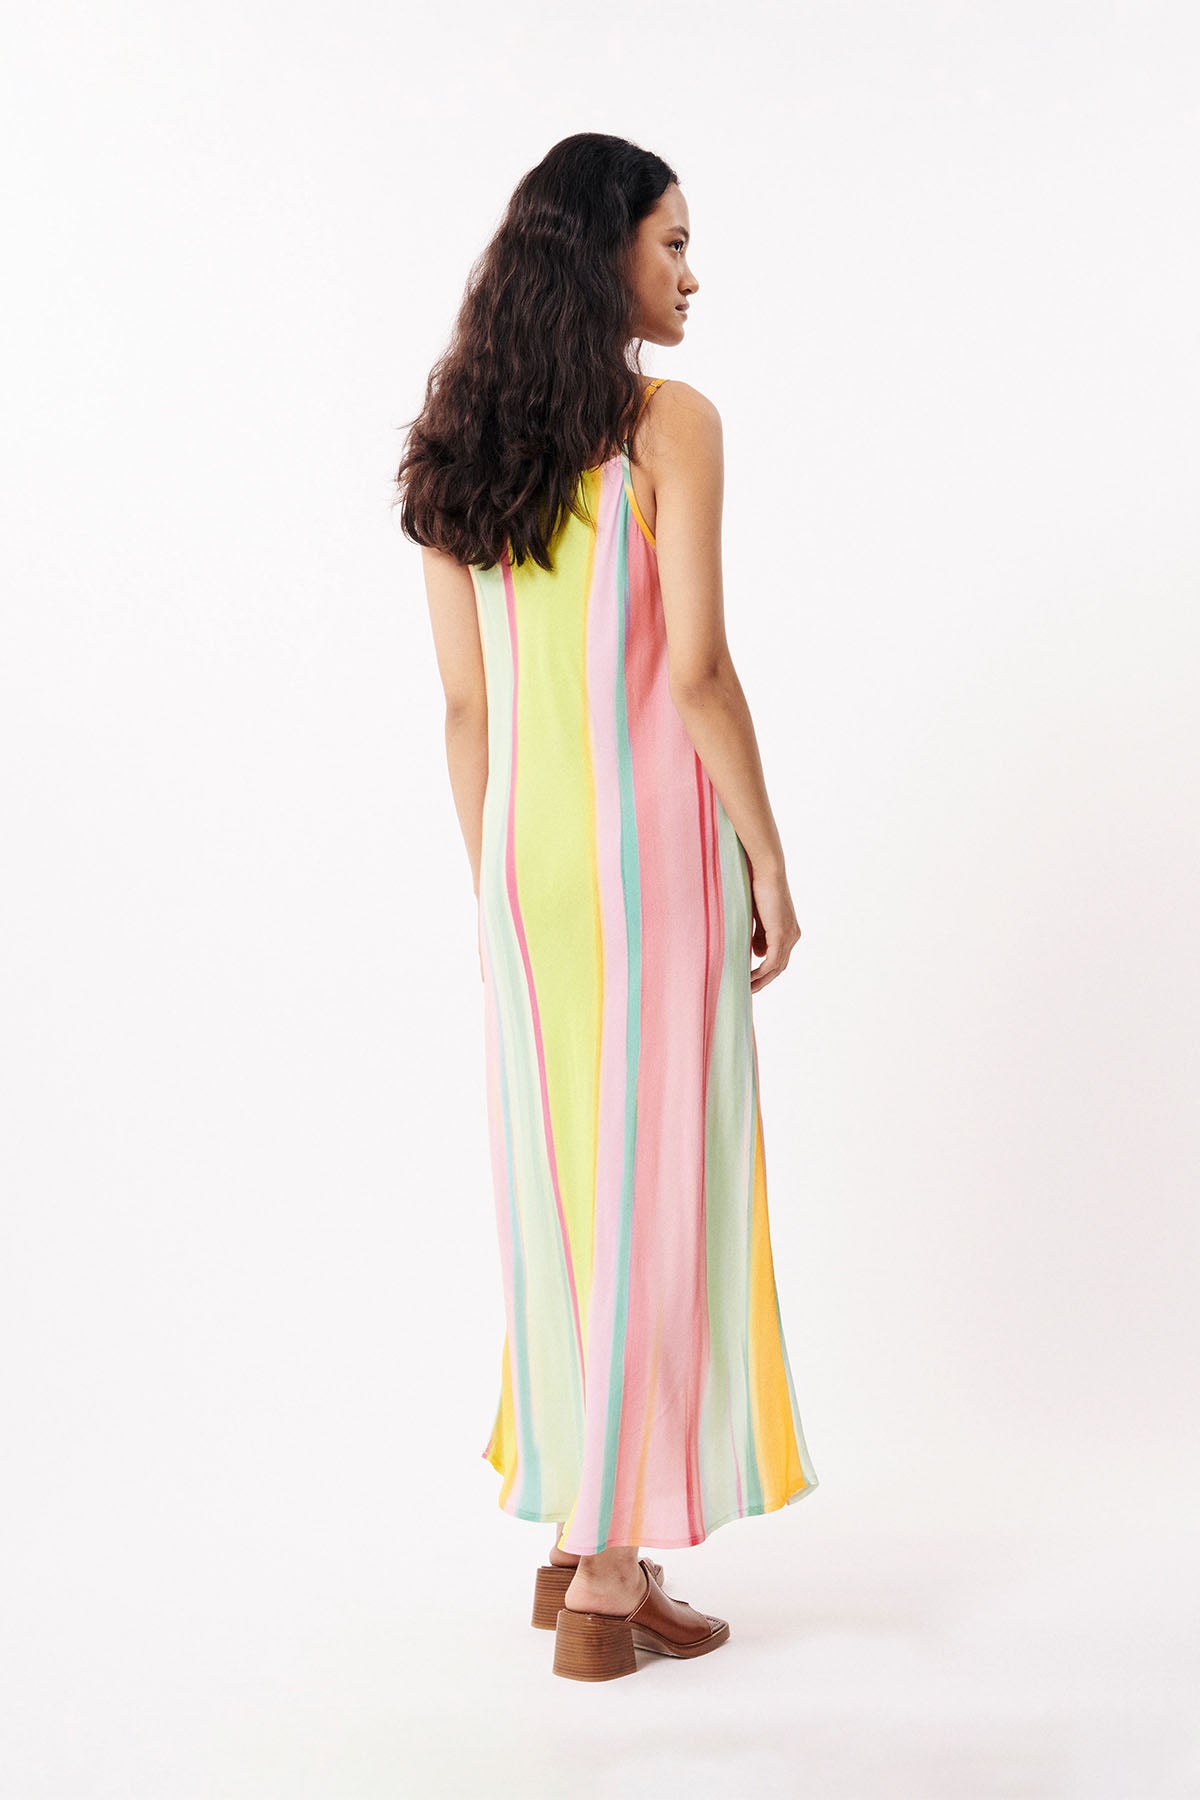 FRNCH - Cika Dress - Diagonal Rainbow - Back